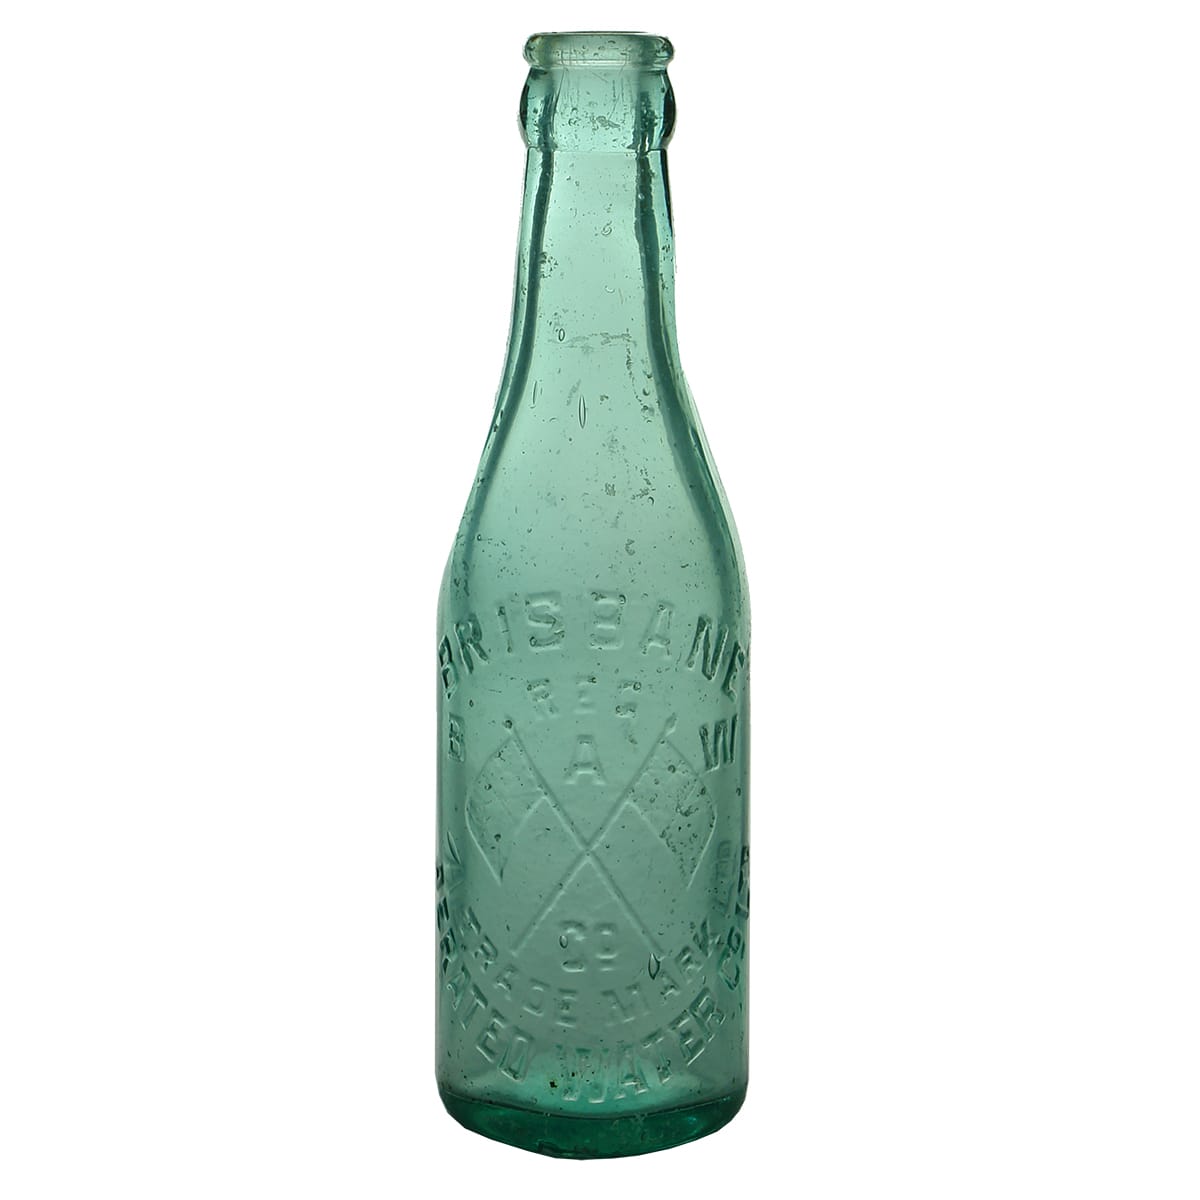 Crown Seal. Brisbane Aerated Water Co. Champagne. Aqua. 6 oz. (Queensland)